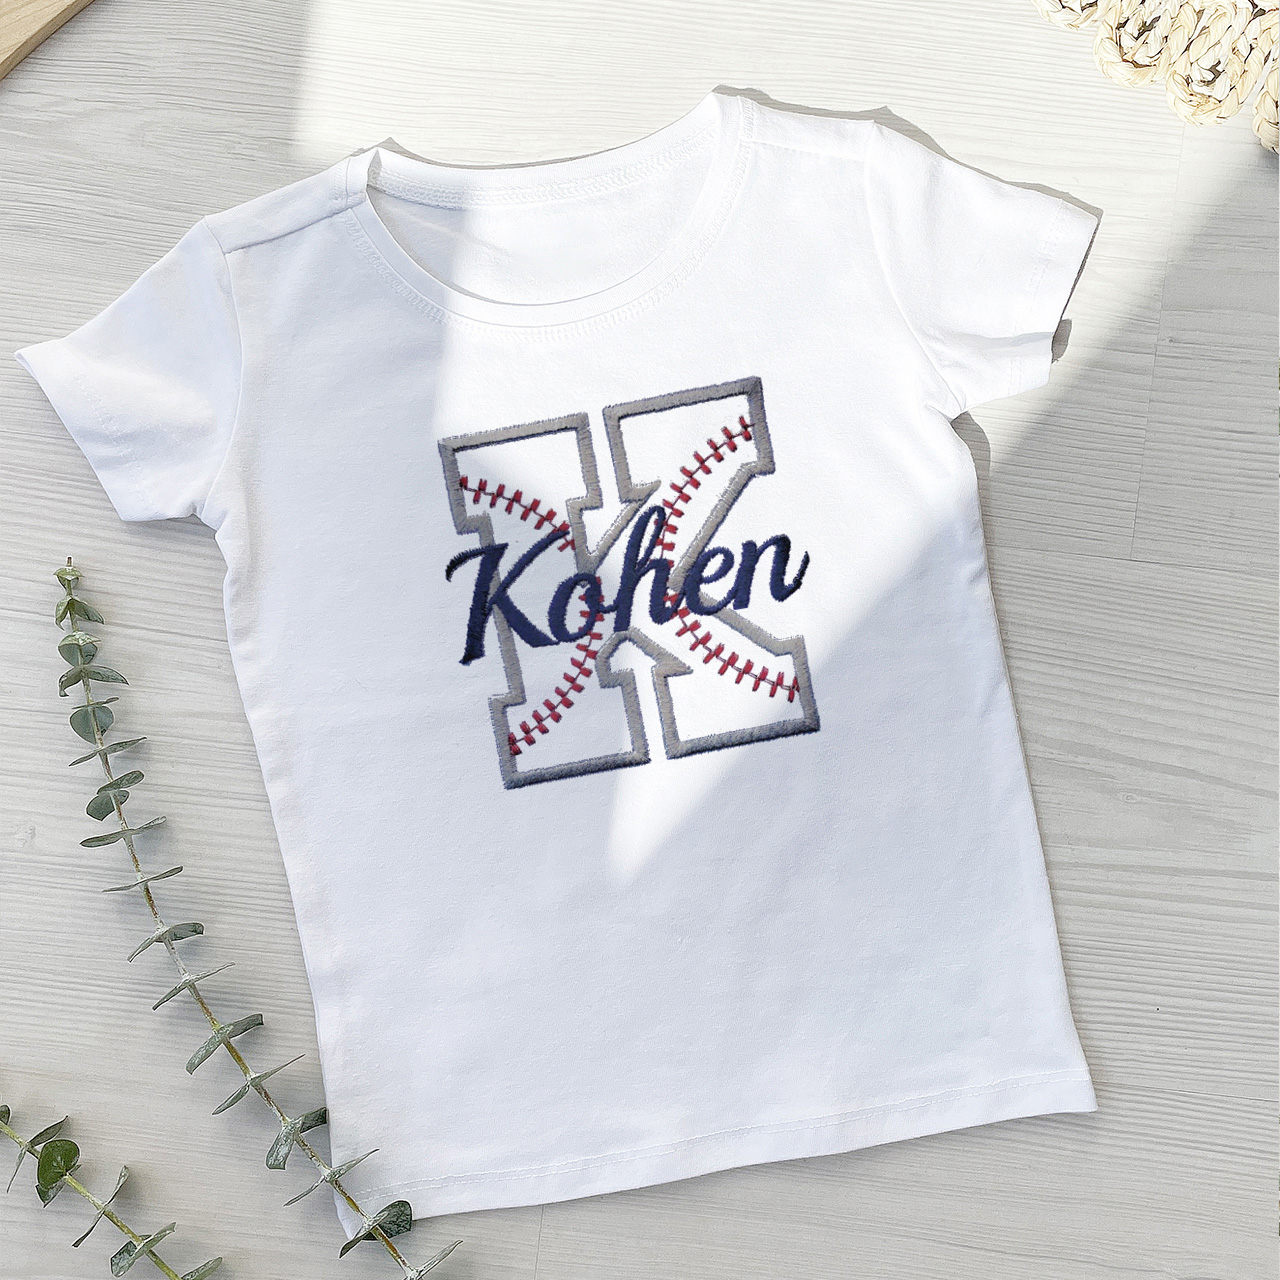 Personalized Baby Bodysuit & Shirts (Baseball)